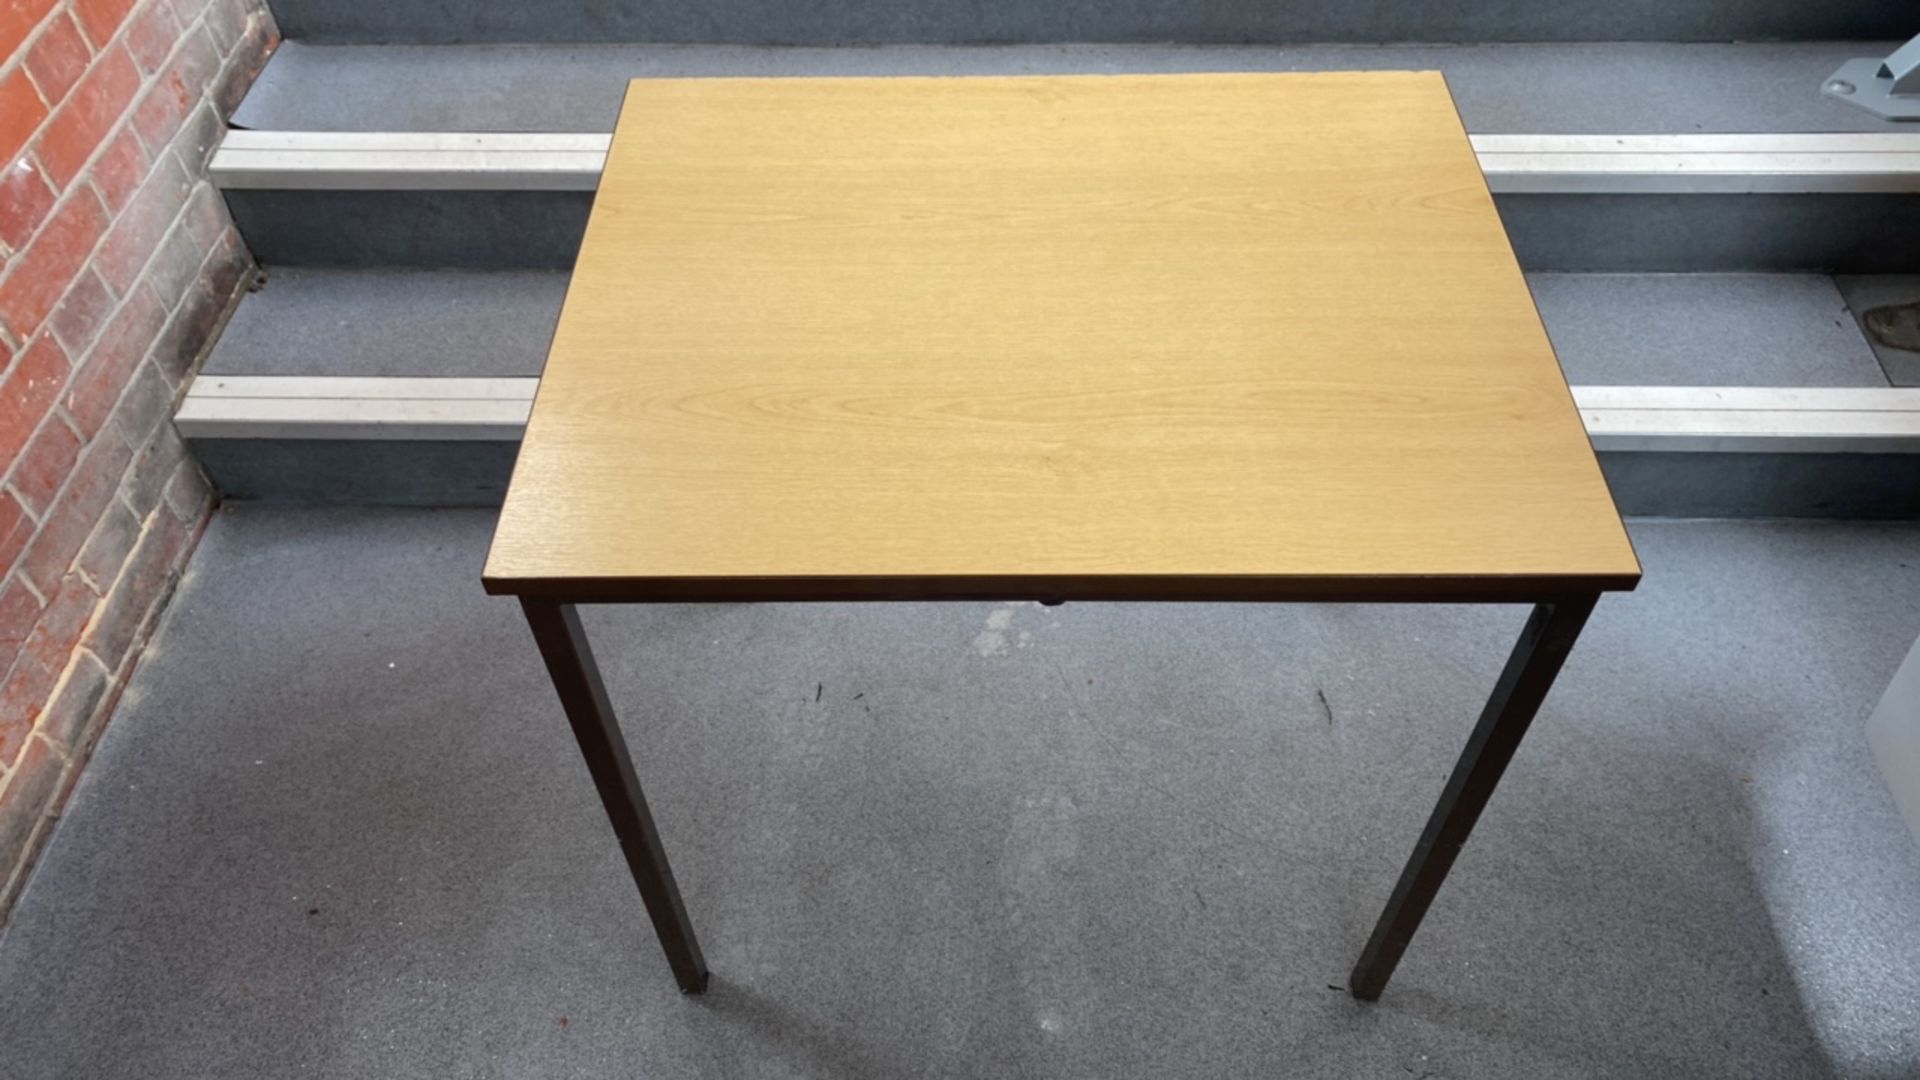 Set of 5 Brown Metal Framed Exam Tables (Brown Edge) - Image 3 of 5